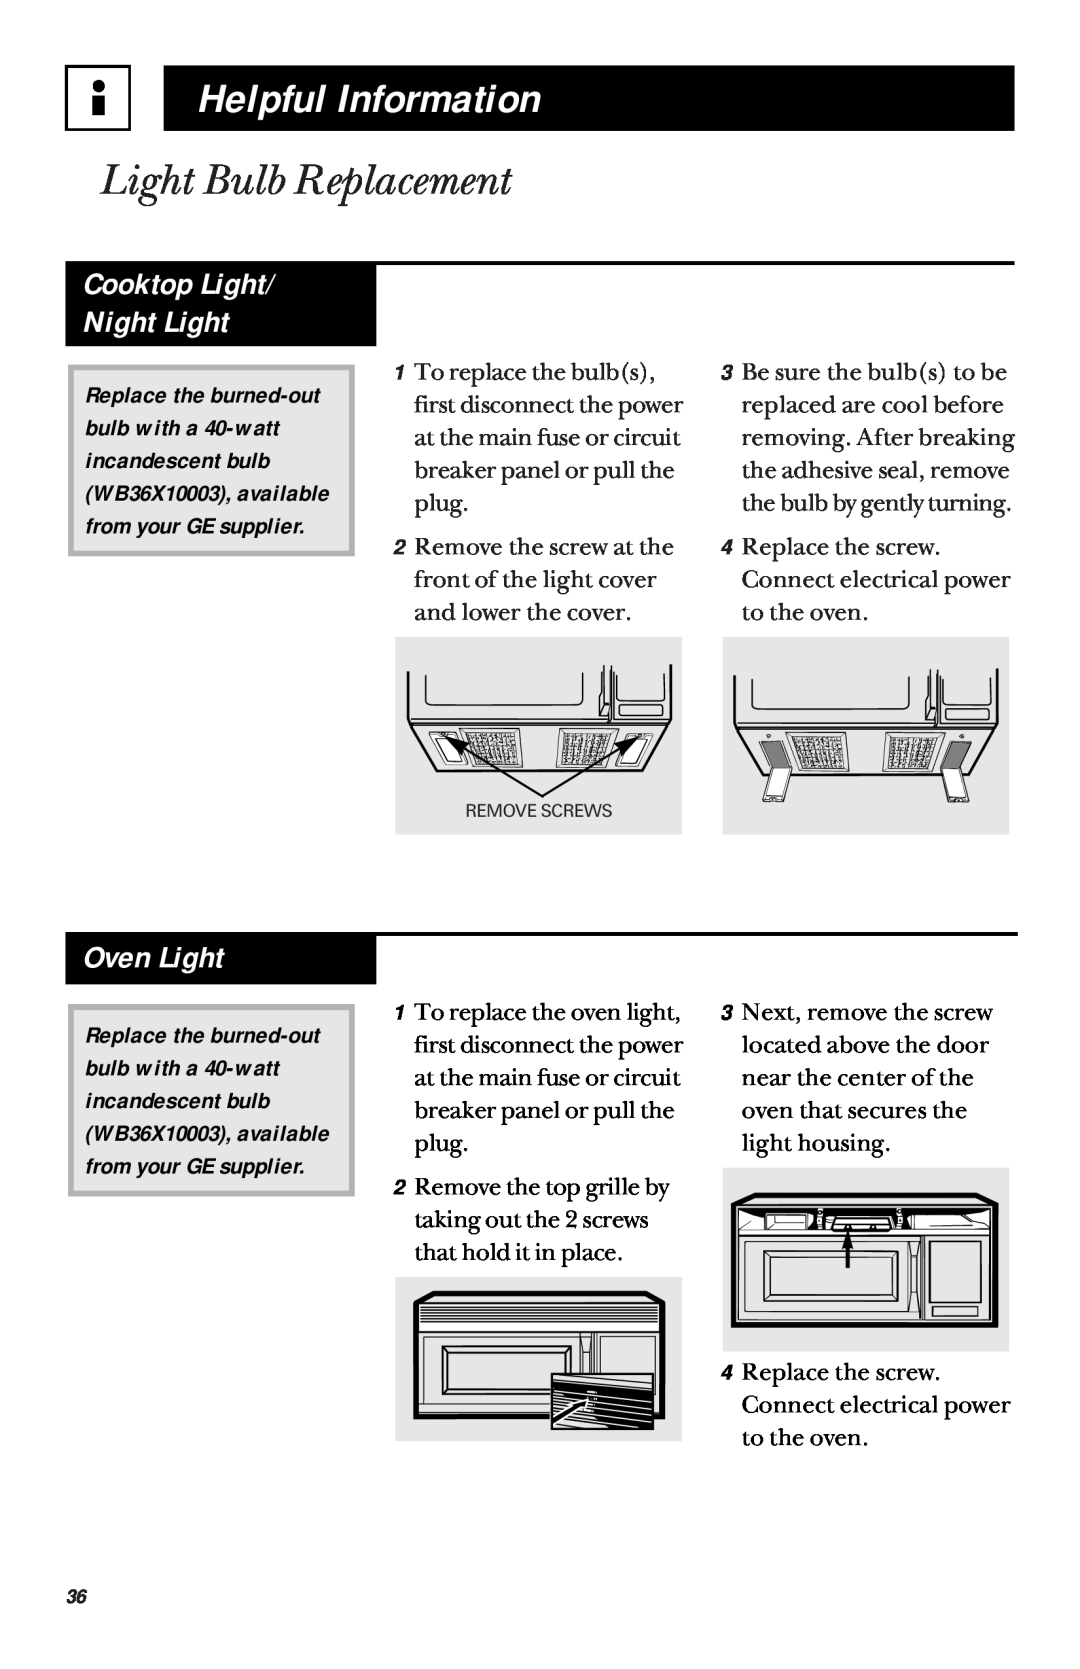 GE JVM1450, JVM1451 owner manual Light Bulb Replacement, Oven Light, Cooktop Light/ Night Light, Helpful Information 